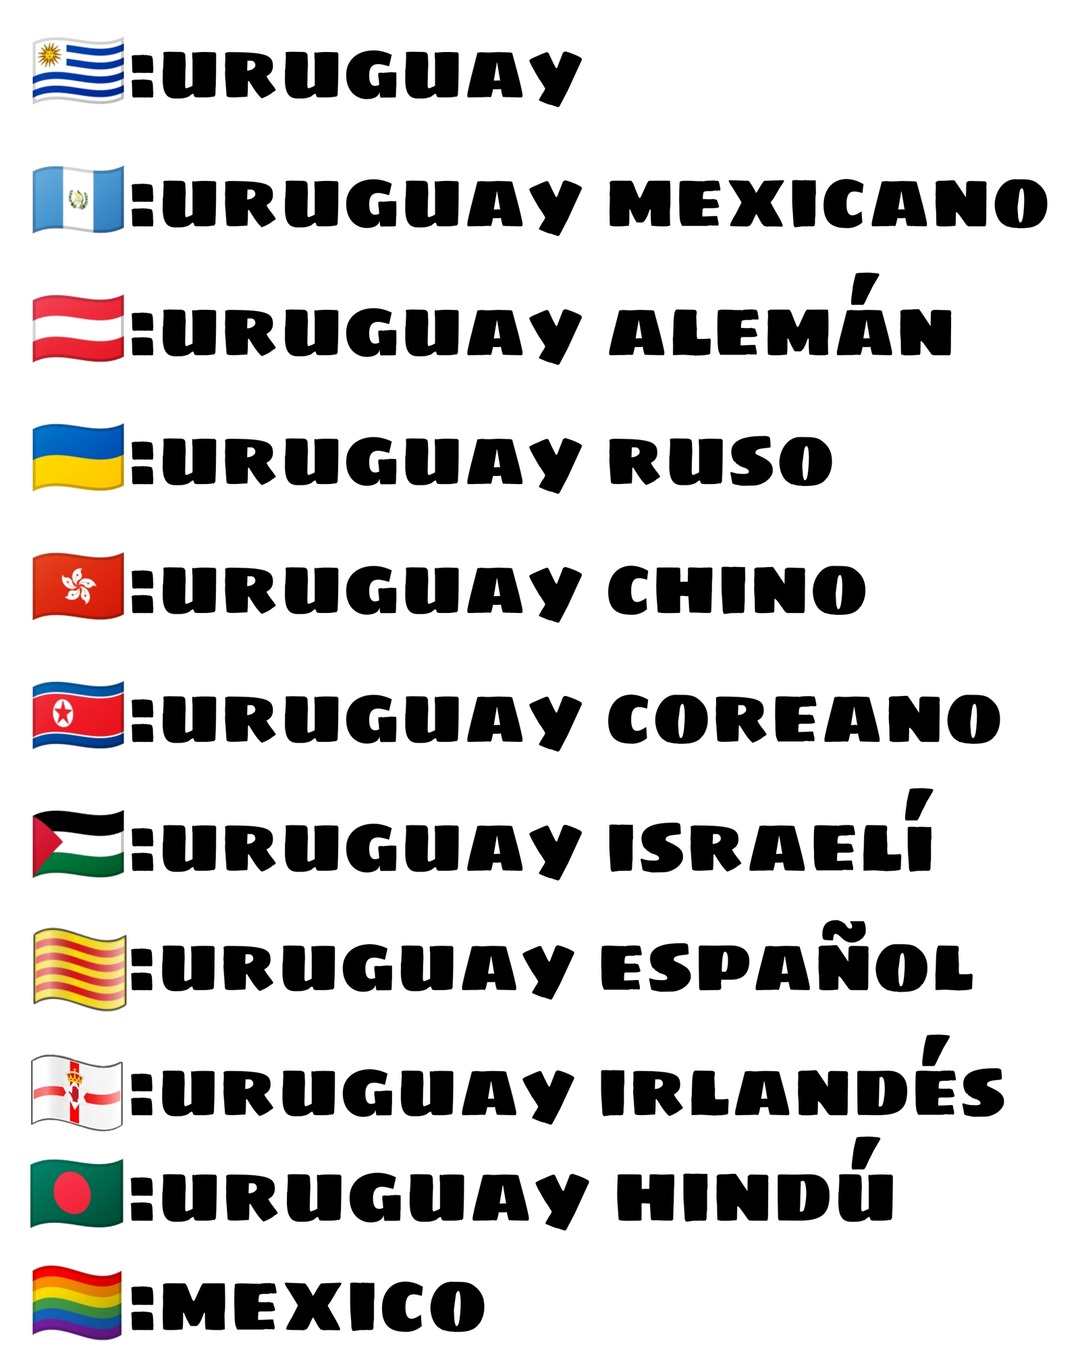 Uruguay - meme